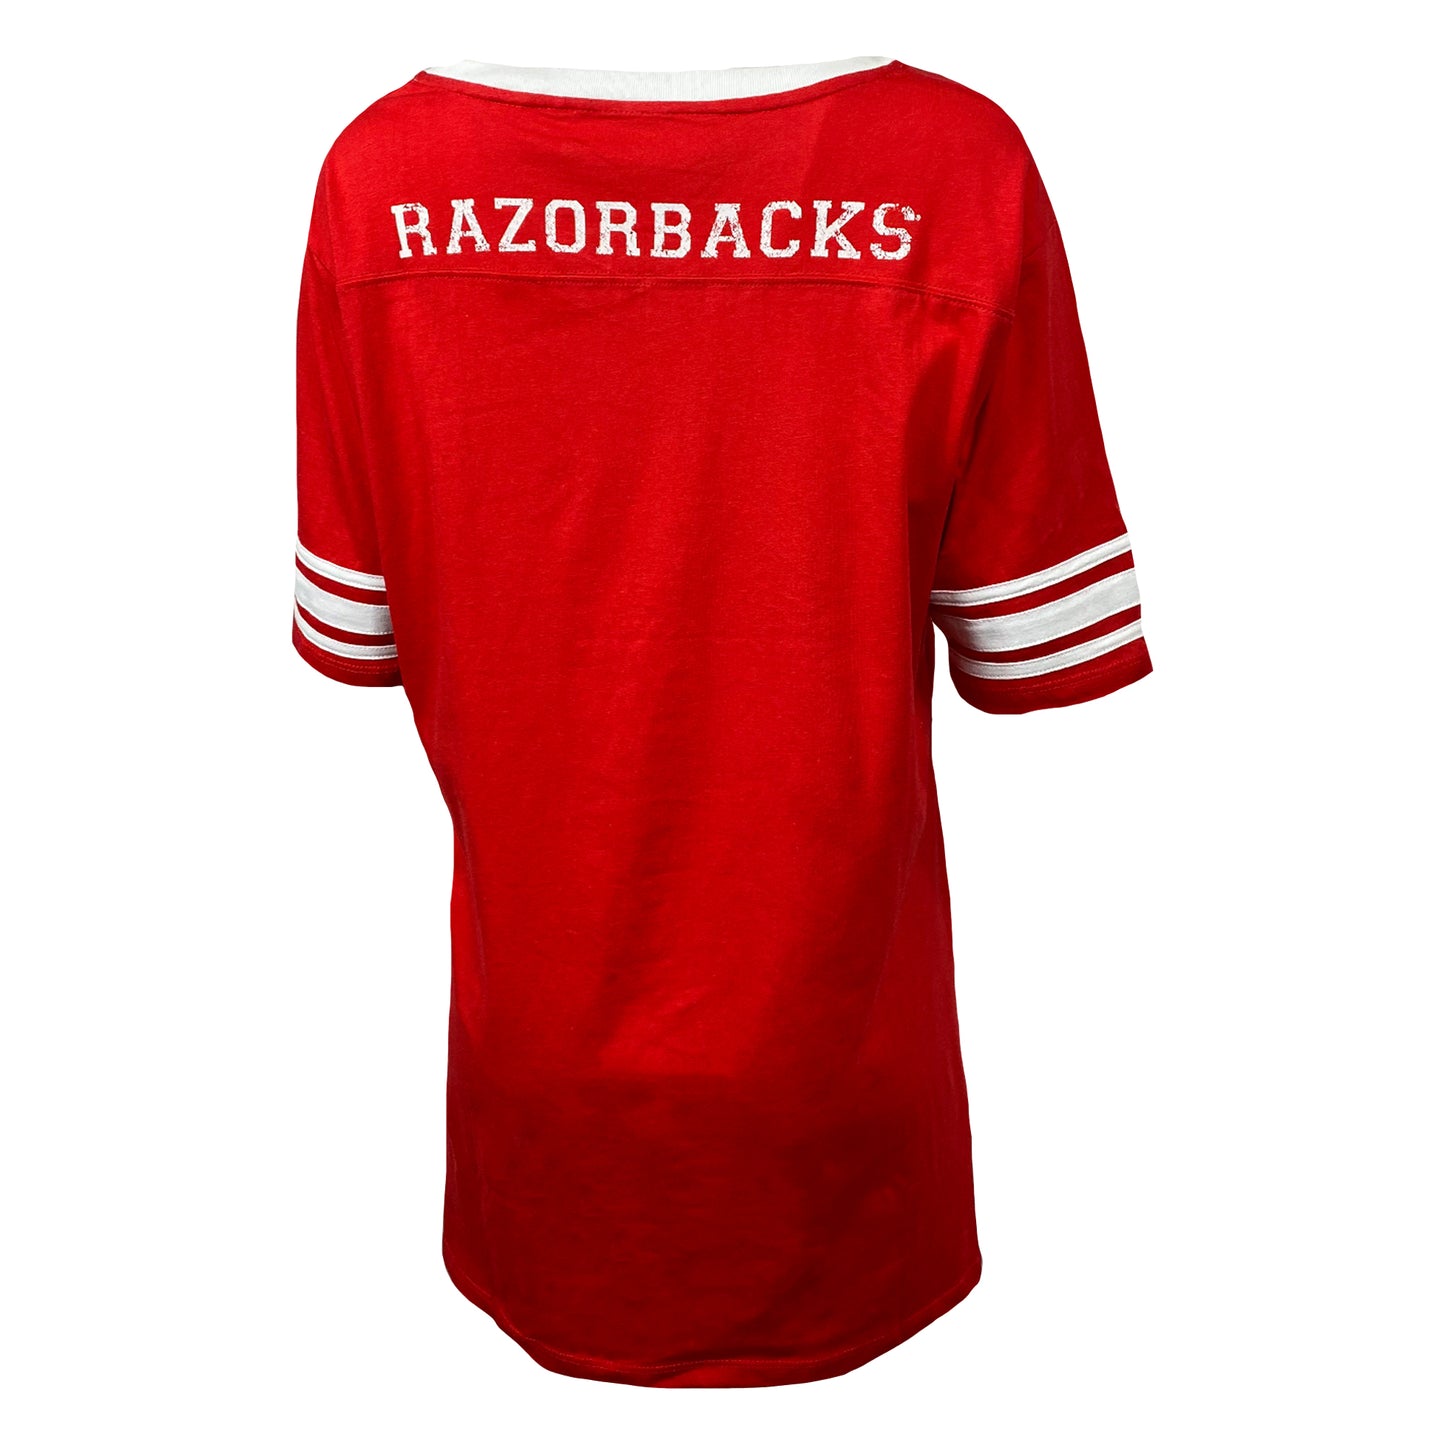 Arkansas Razorbacks Football Jersey Nightshirt